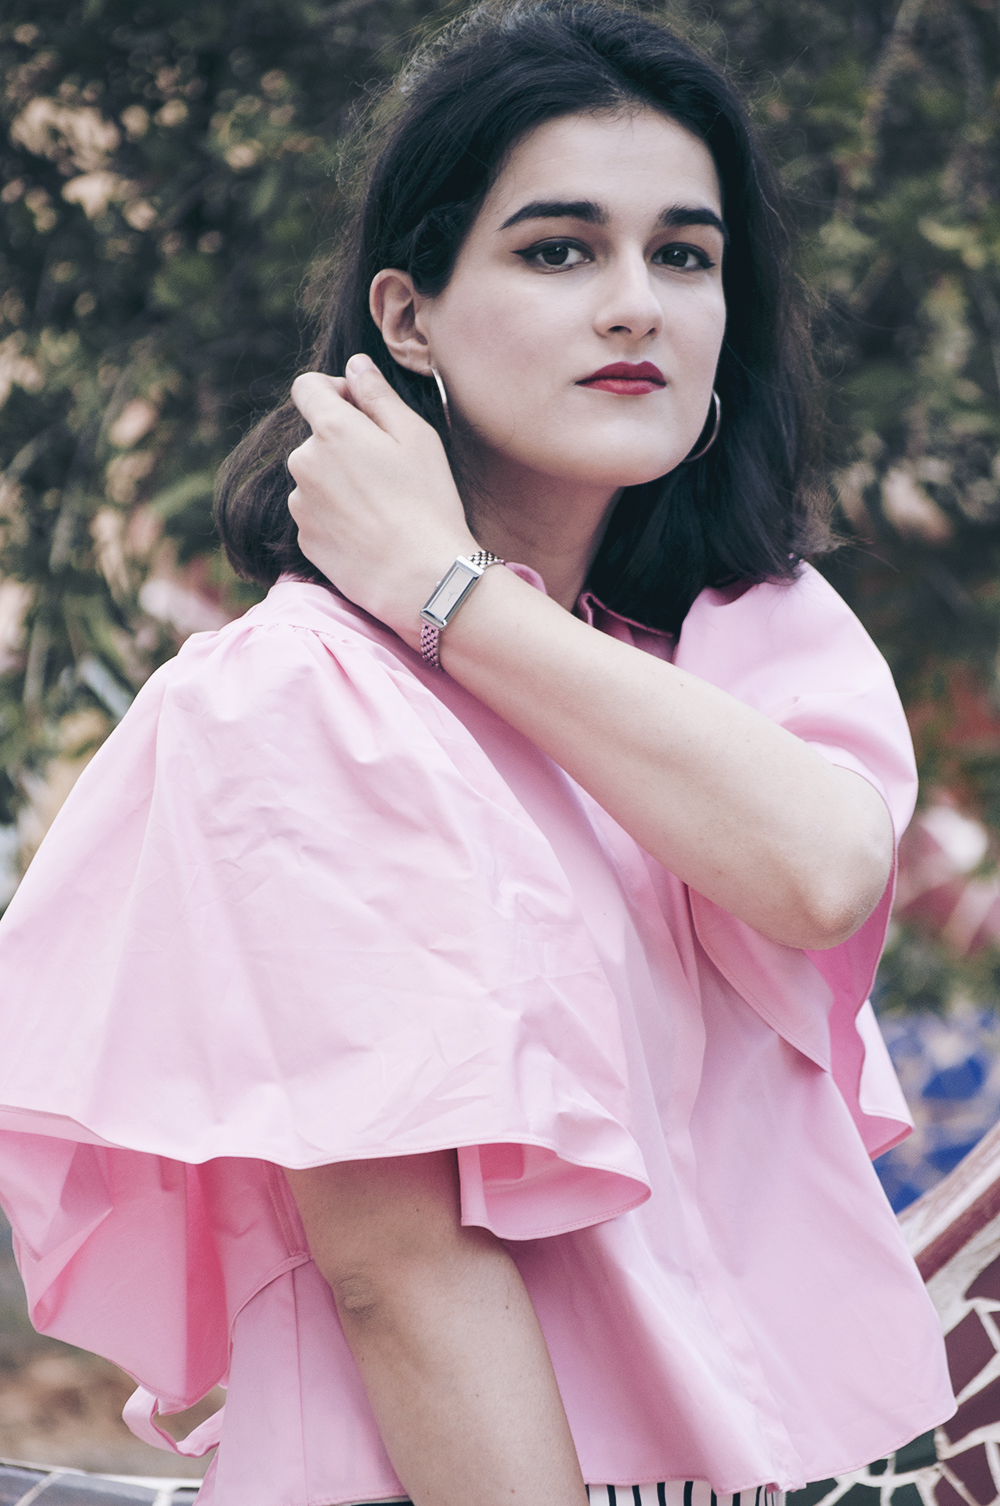 ootd somethingfashion valencia spain bloggers influencers zara pinkshirt dresses summer lookdujour_0076 copia